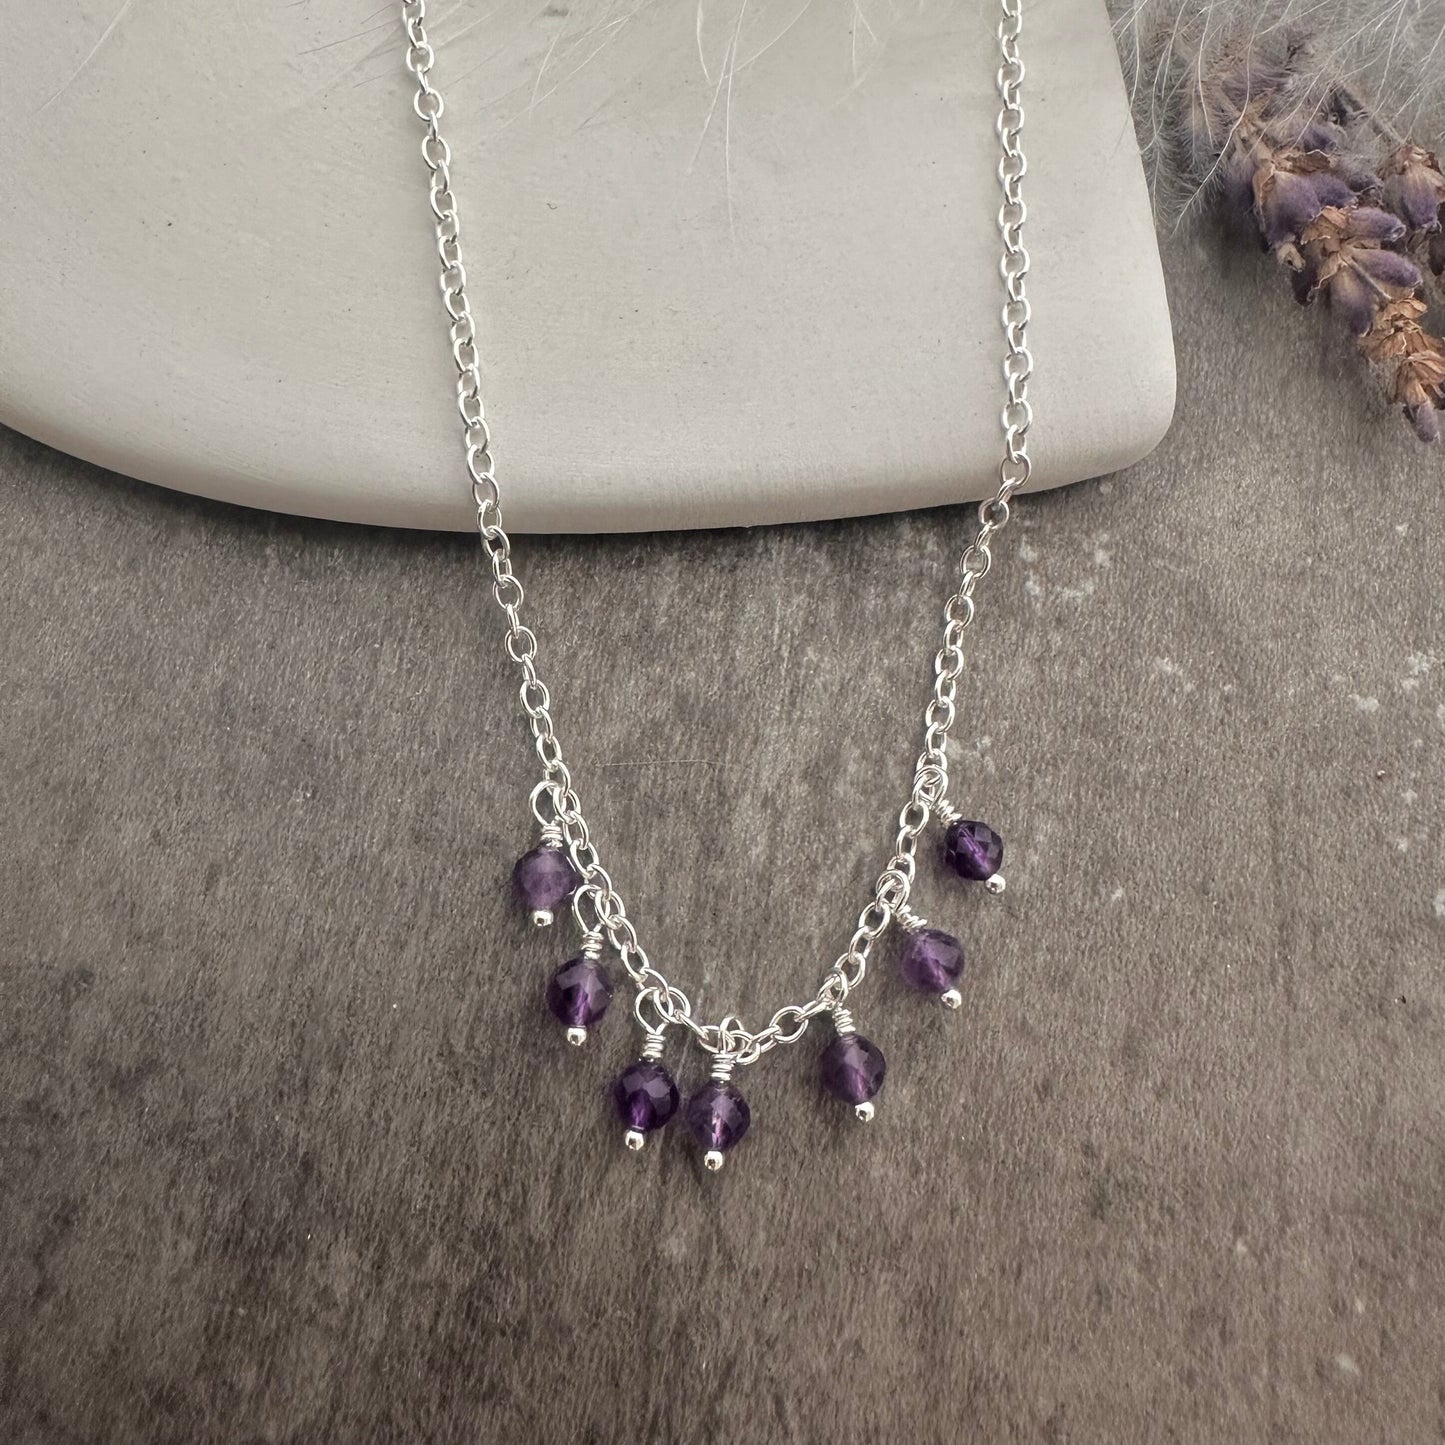 Dainty Amethyst drops necklace sterling silver, February birthstone jewellery